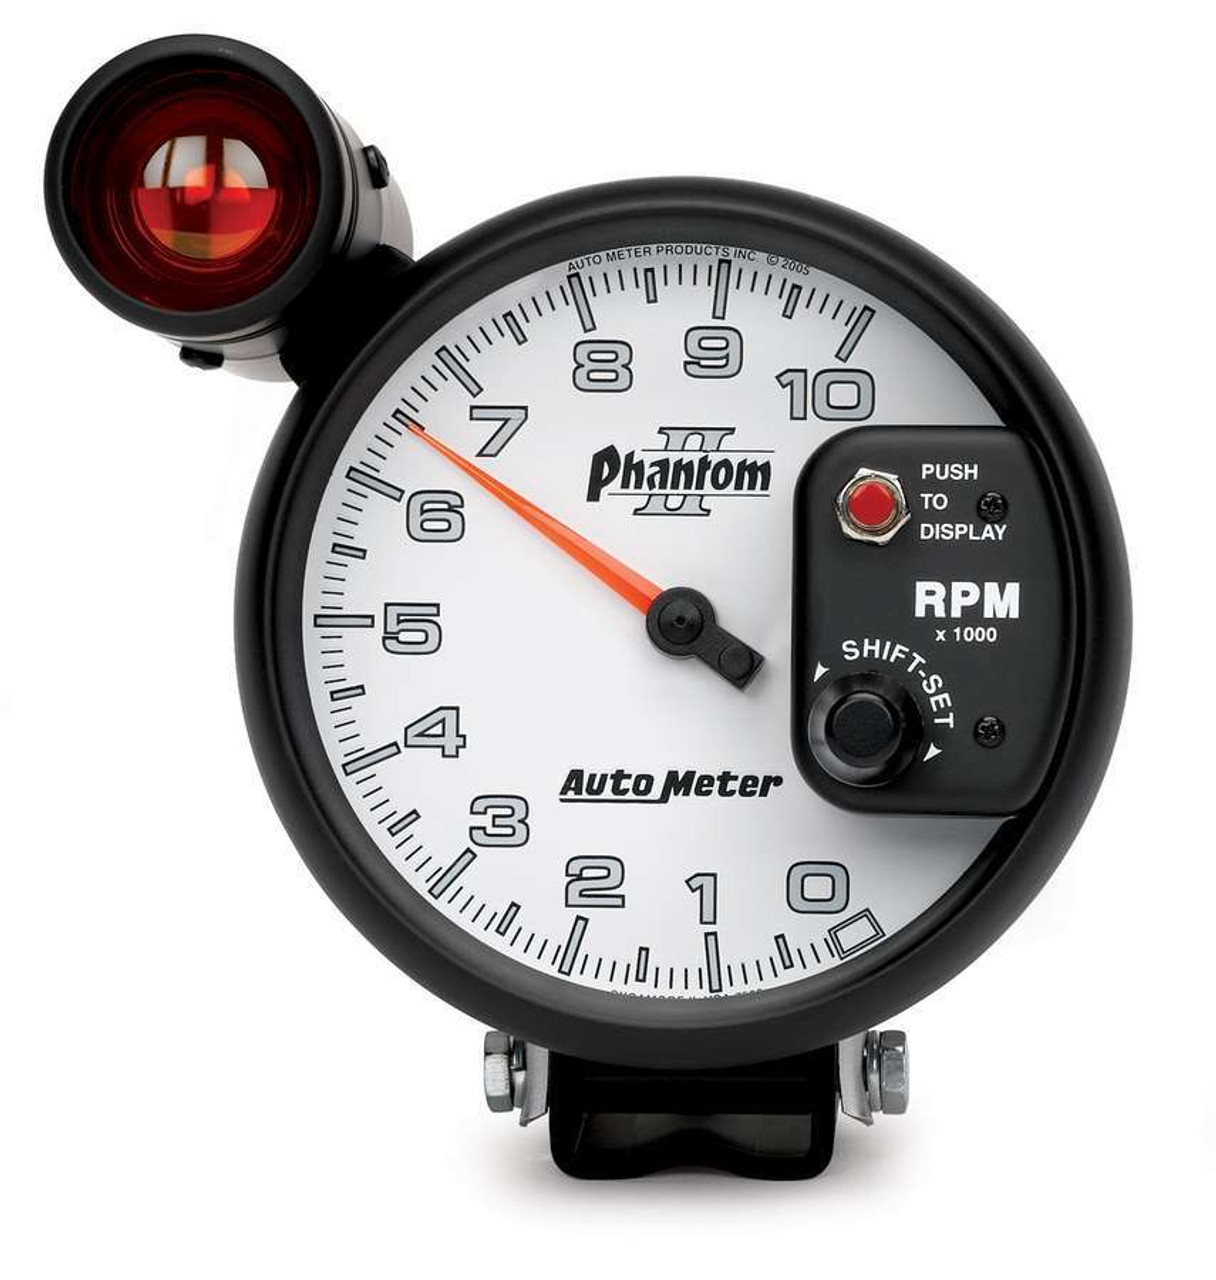 Autometer 5 inch Pedestal Mount 10000 RPM Shift-Lite Tachometer - 7599